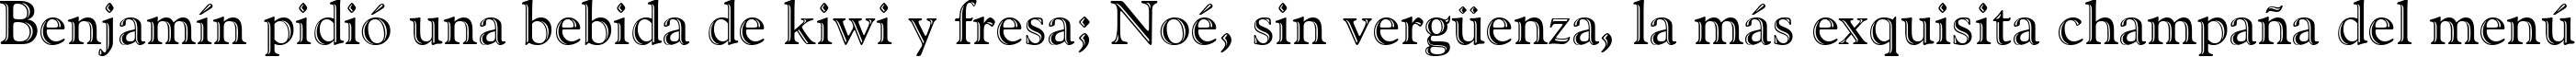 Пример написания шрифтом Goudy Handtooled BT текста на испанском